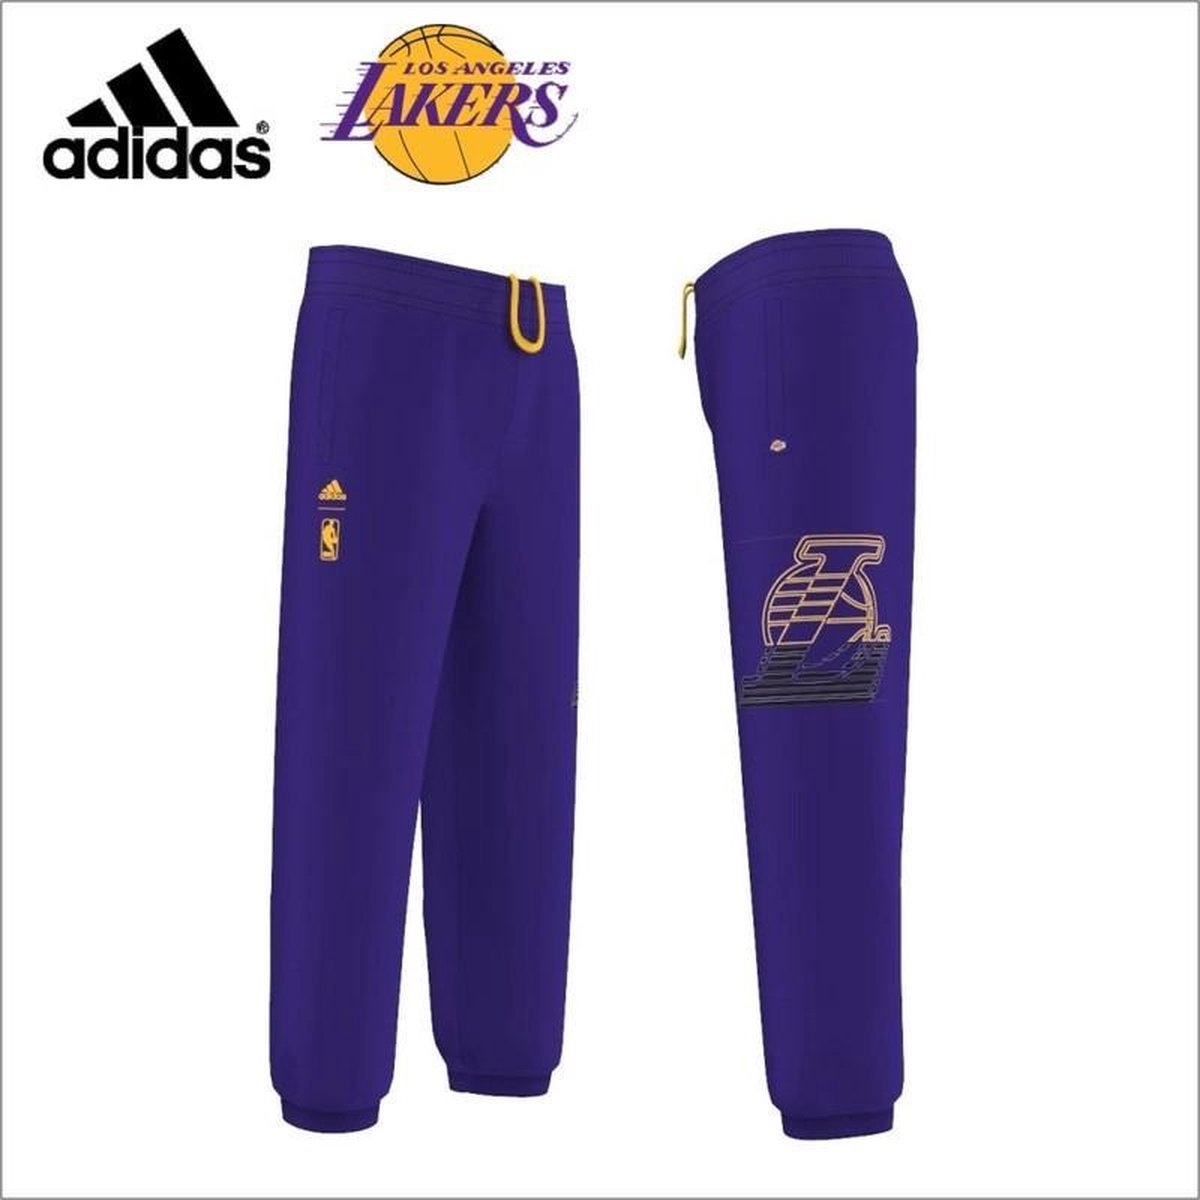 bol.com | Adidag NBA Jogging Broek LA Lakers paars maat XL